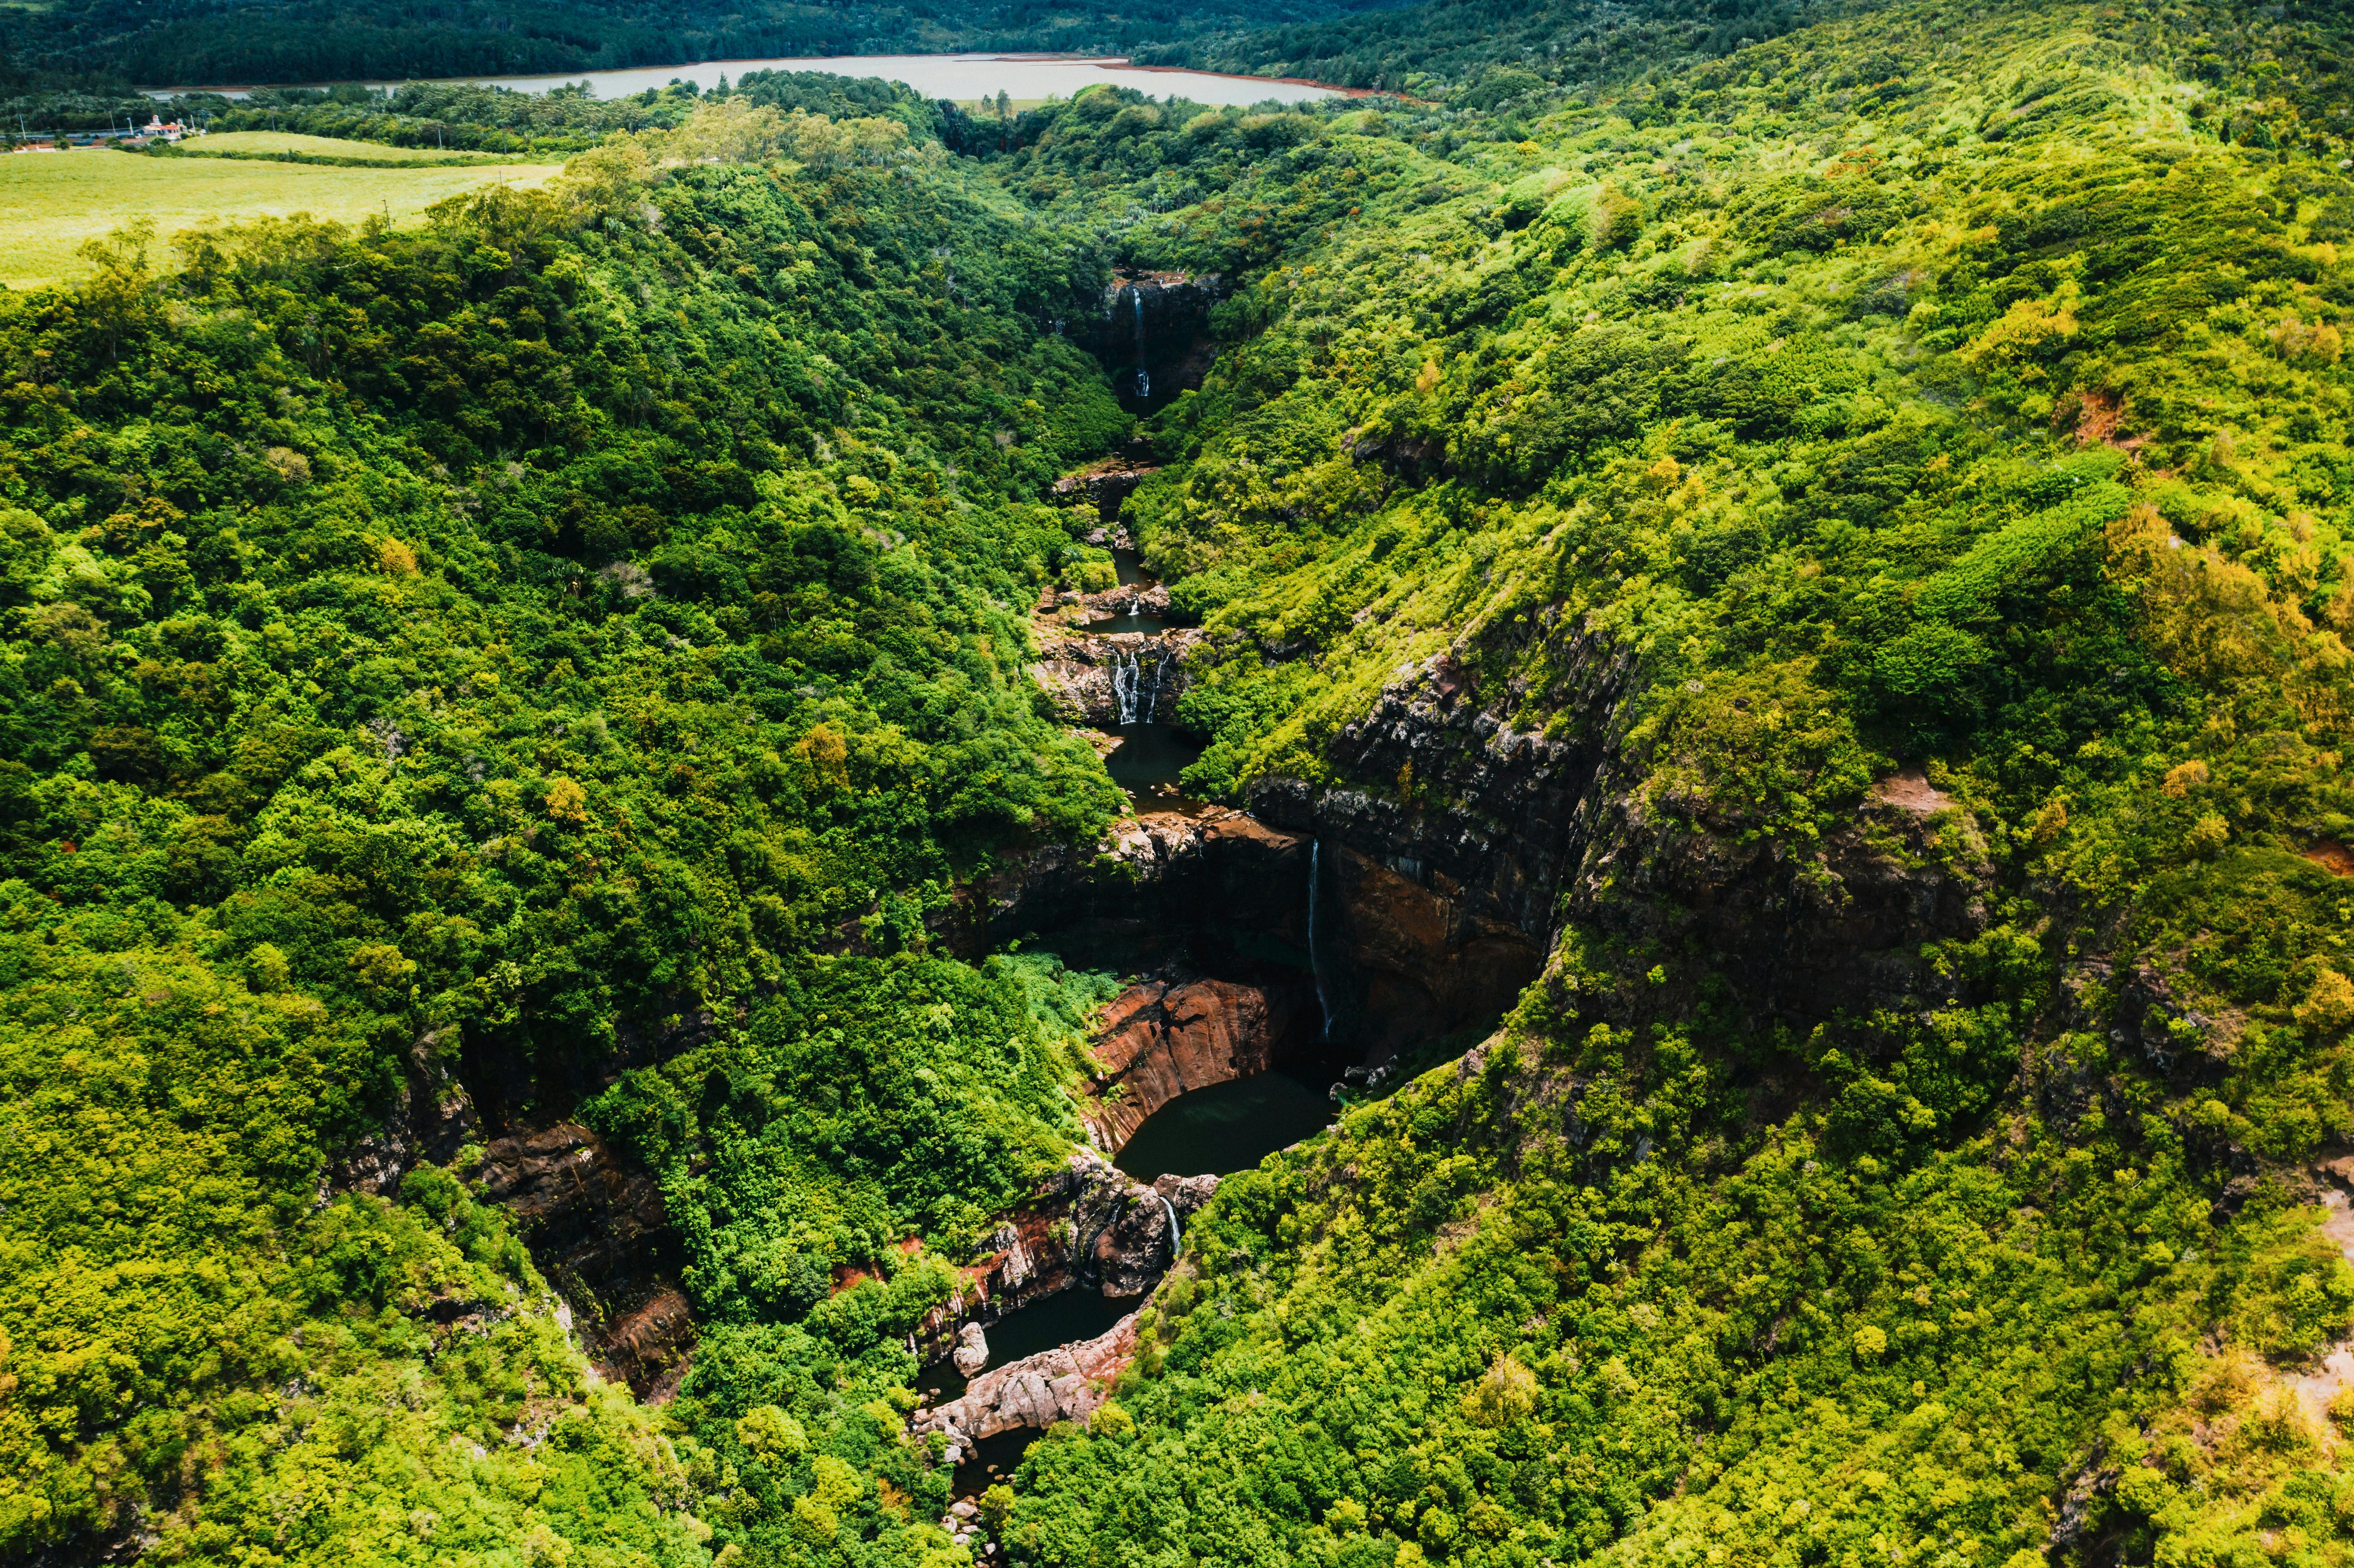 Kanioning po 7 kaskadach wodospadu Tamarind Falls na Mauritiusie